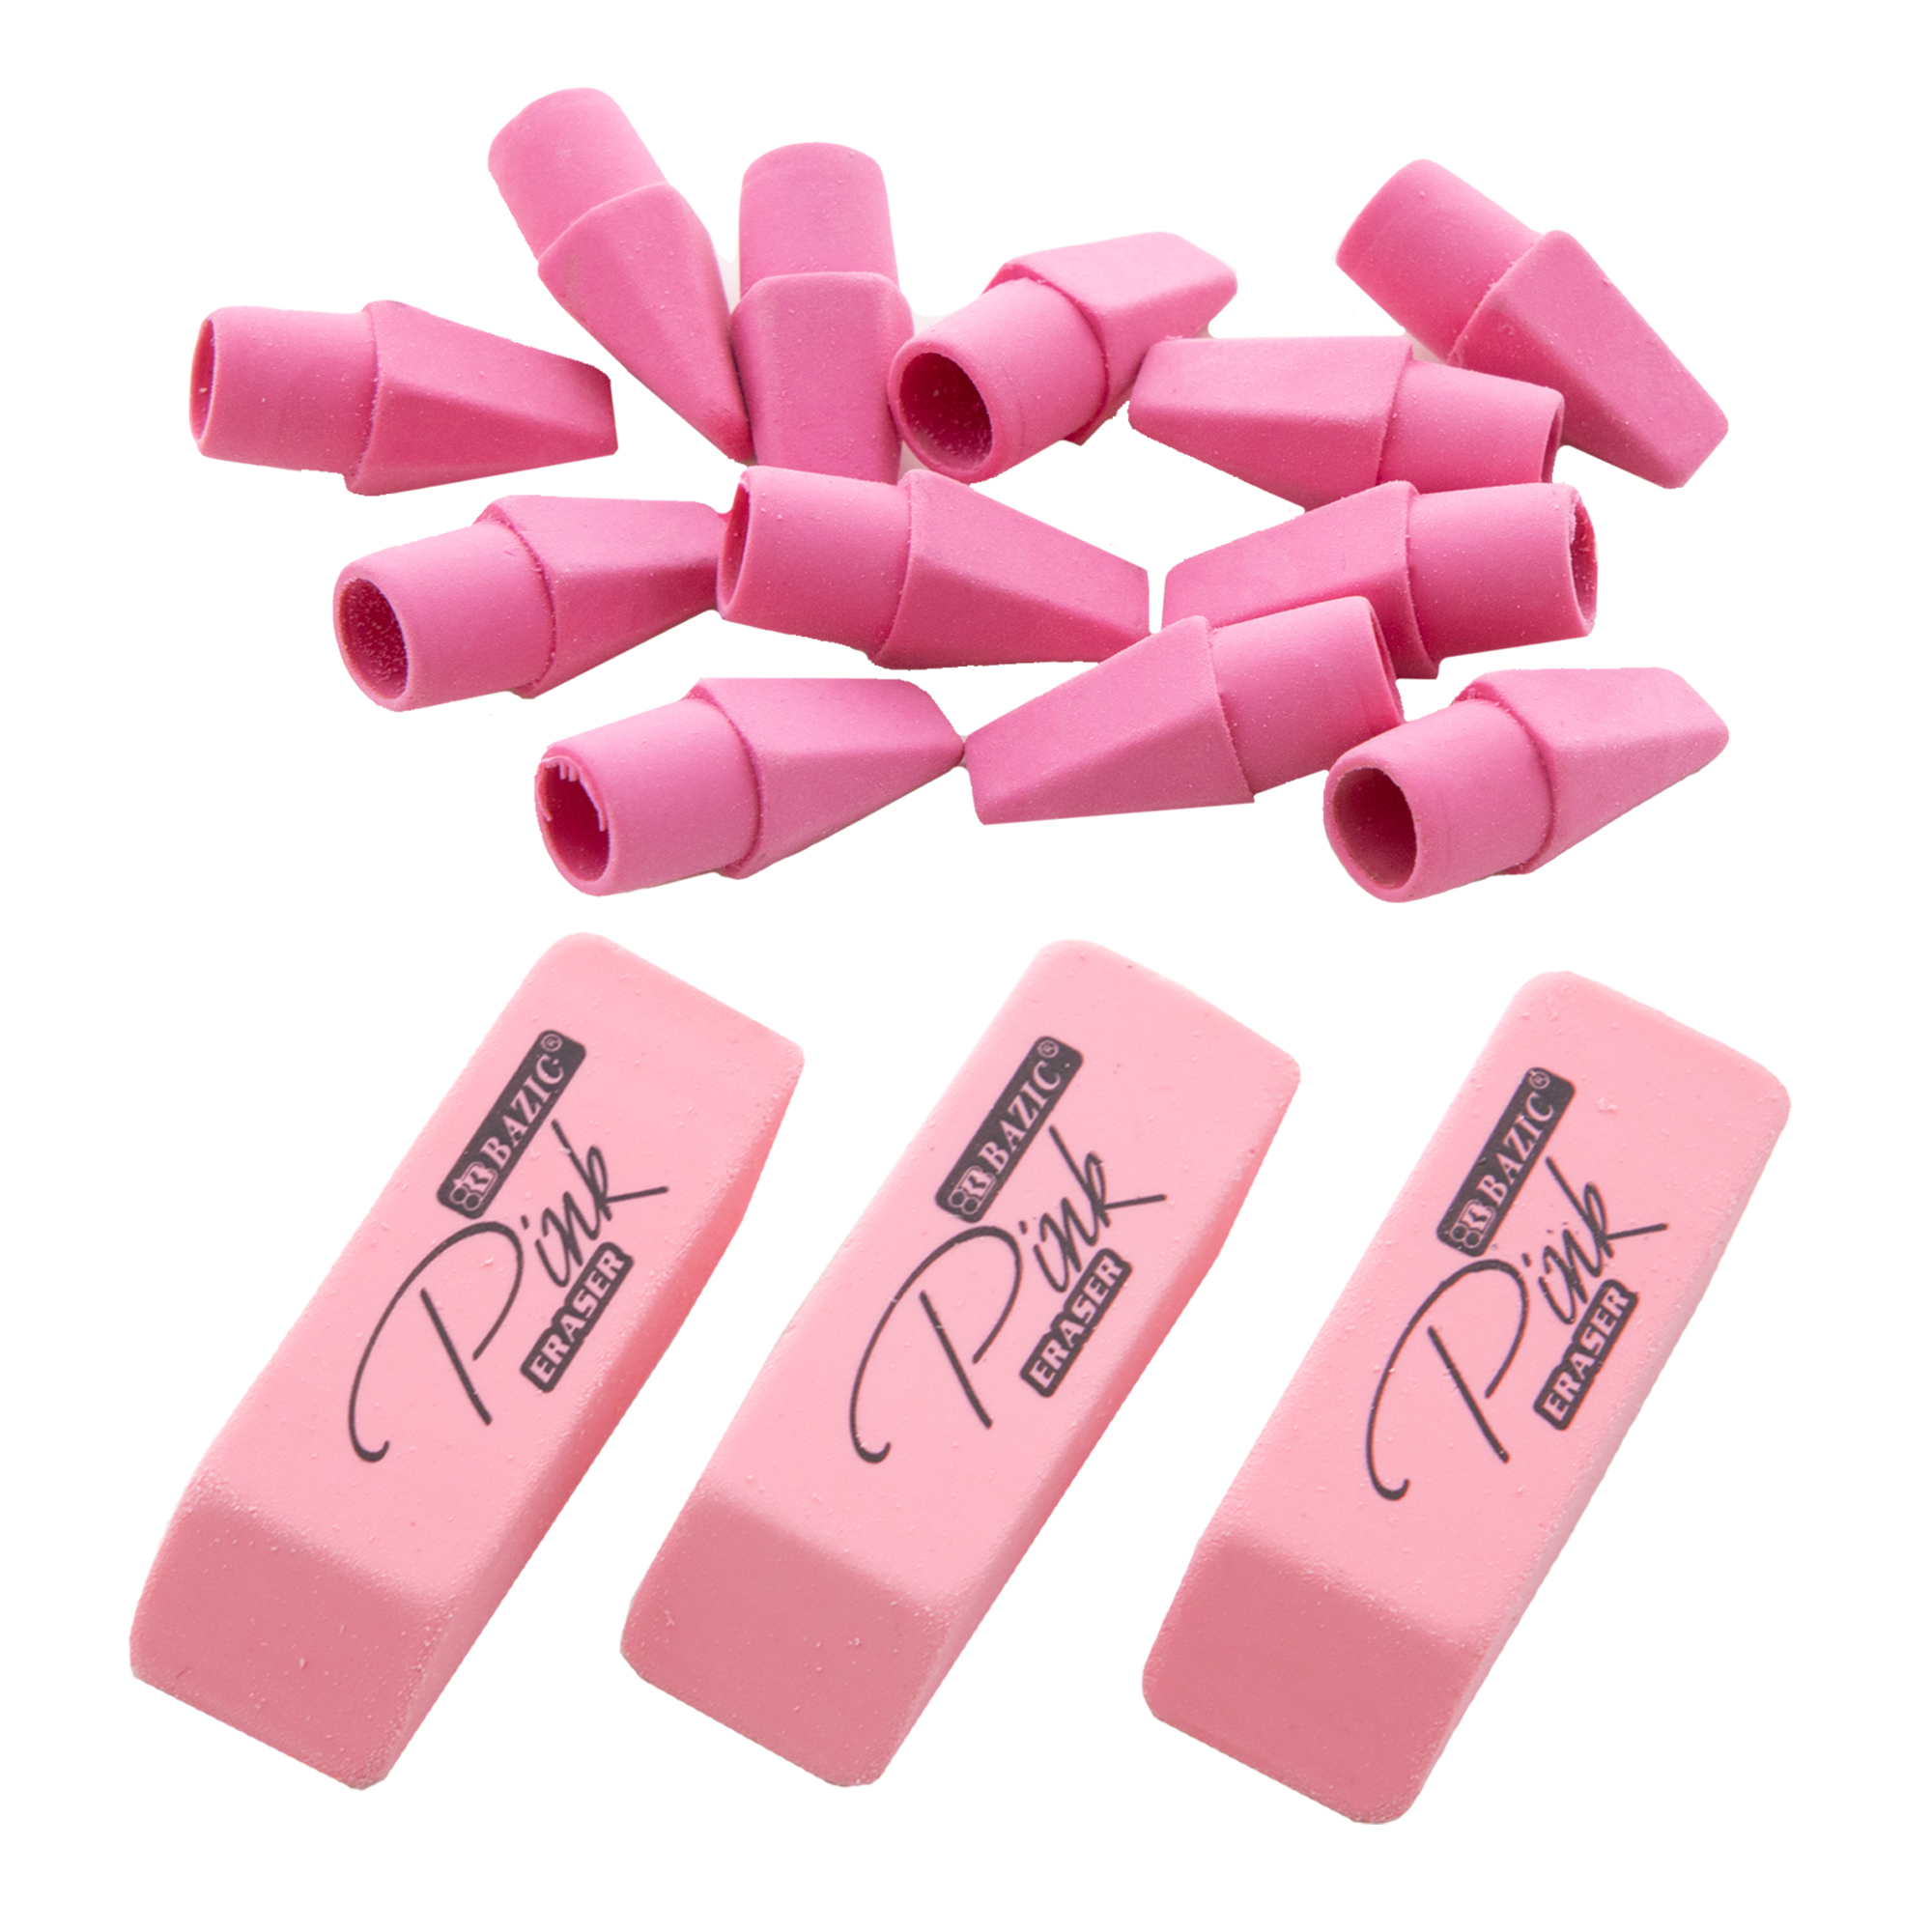 Pencil Top 24-Pack 15/Pack Arrowhead Caps Tops Eraser Large Size Bulk Erasers for Art School Office Kids Teachers BAZIC Pink Eraser Sets Block Erasers 